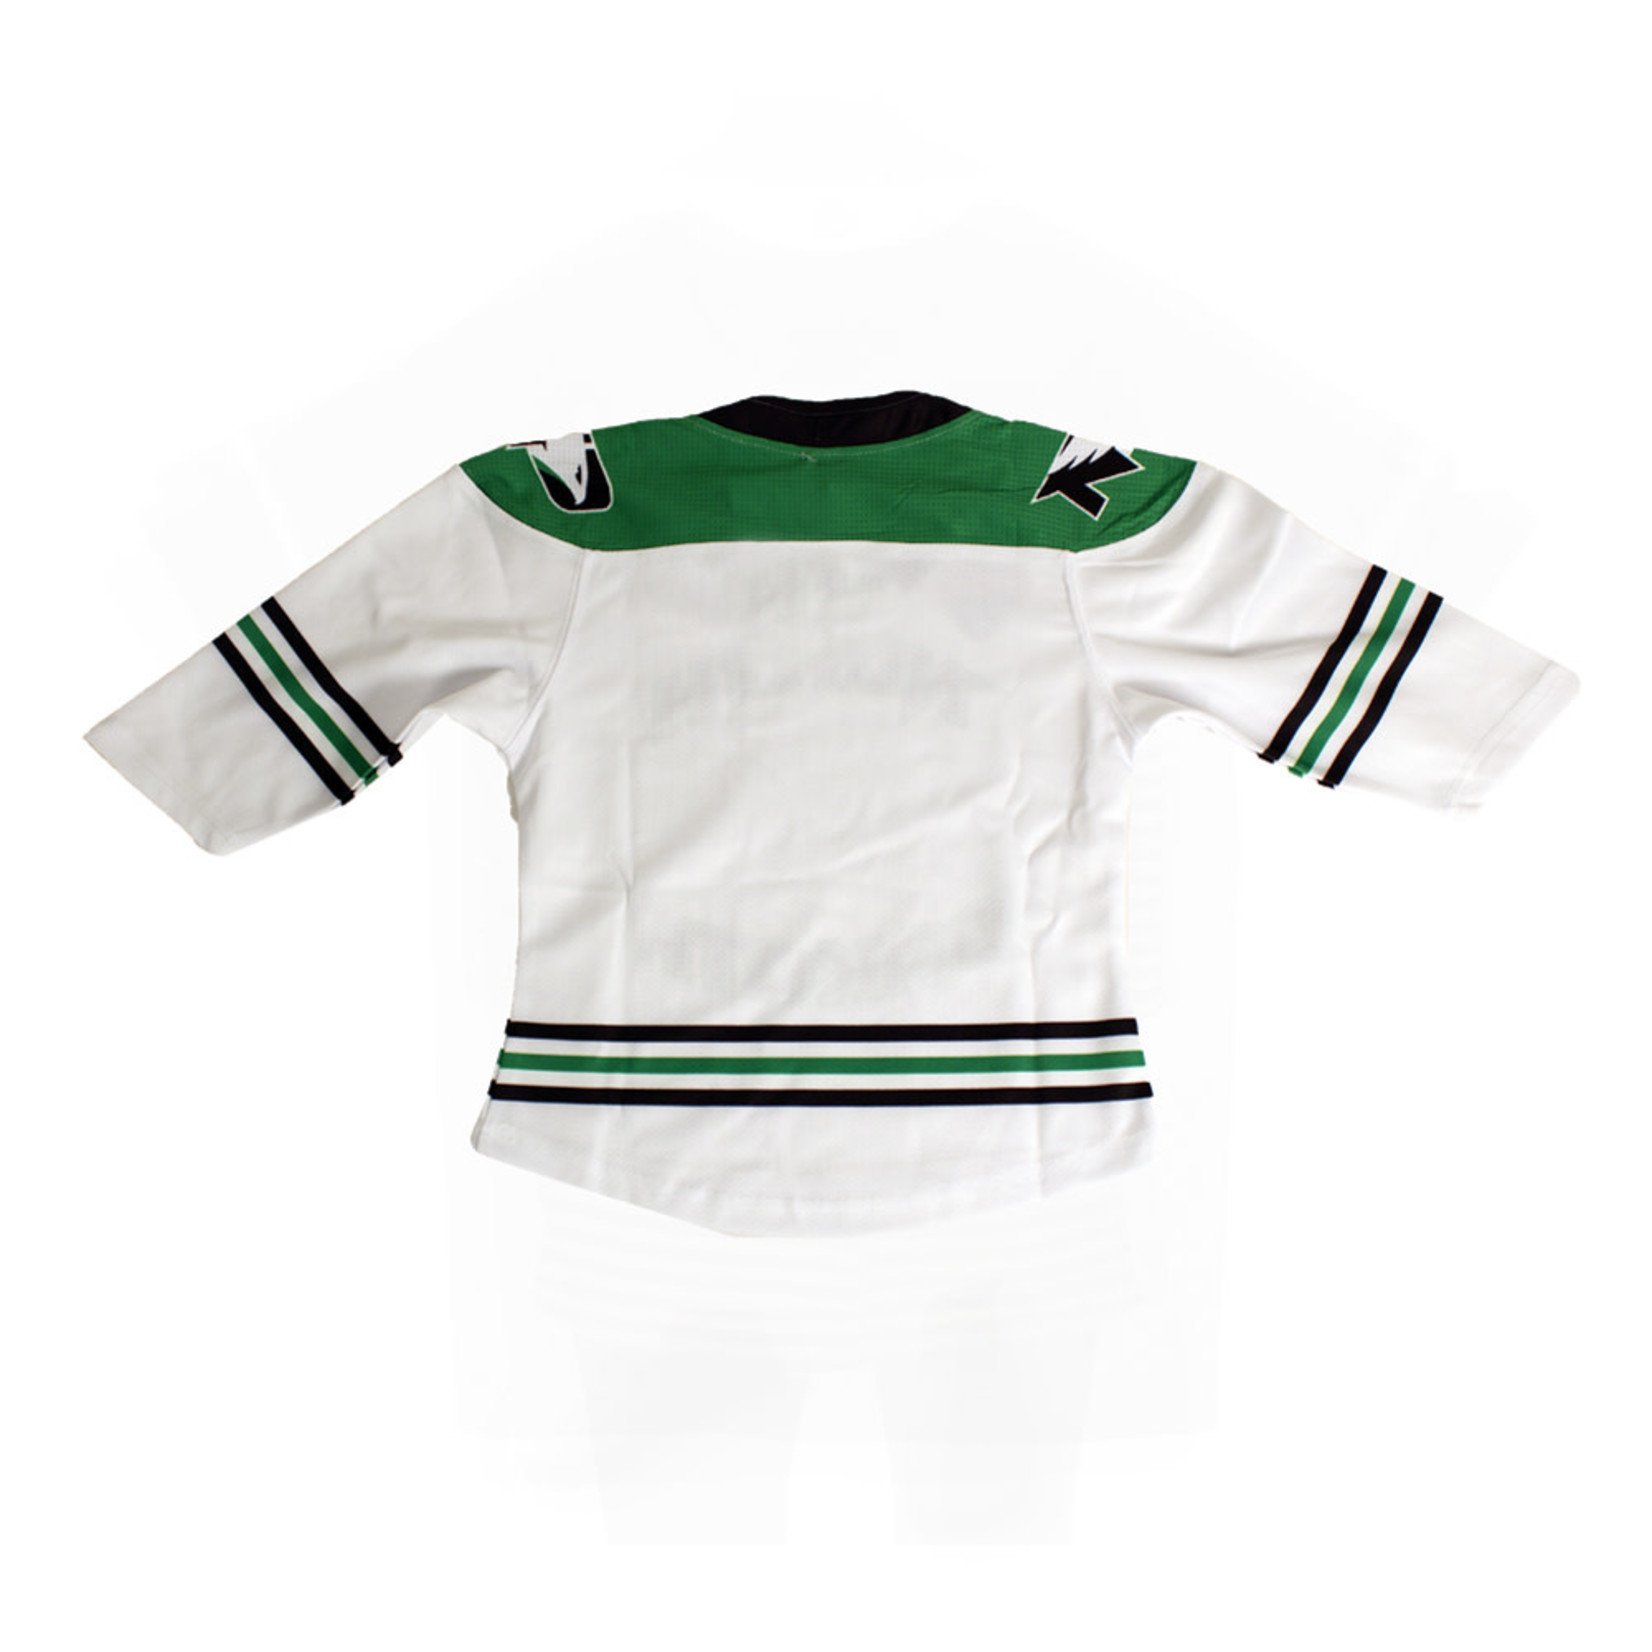 North Dakota Replica Hockey Jersey - Green